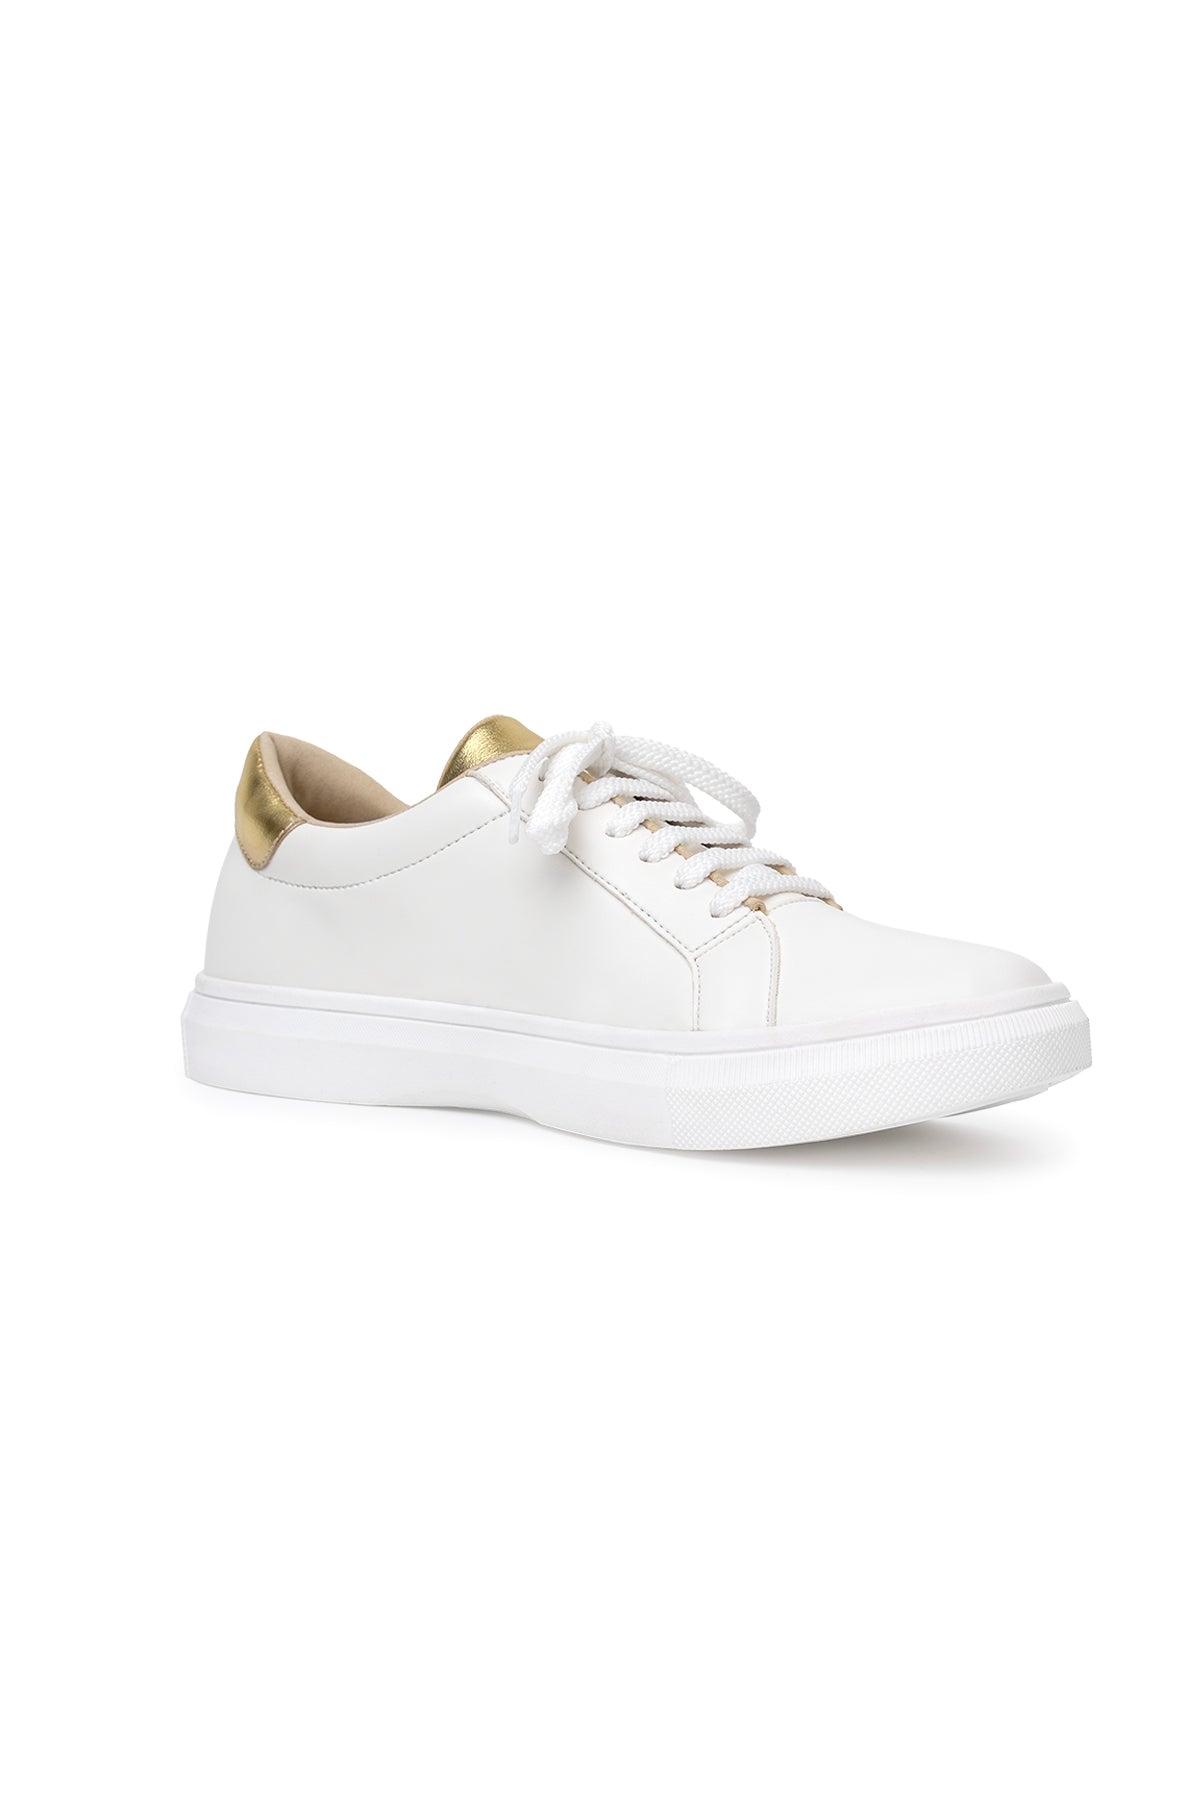 Oxana Shoes - White